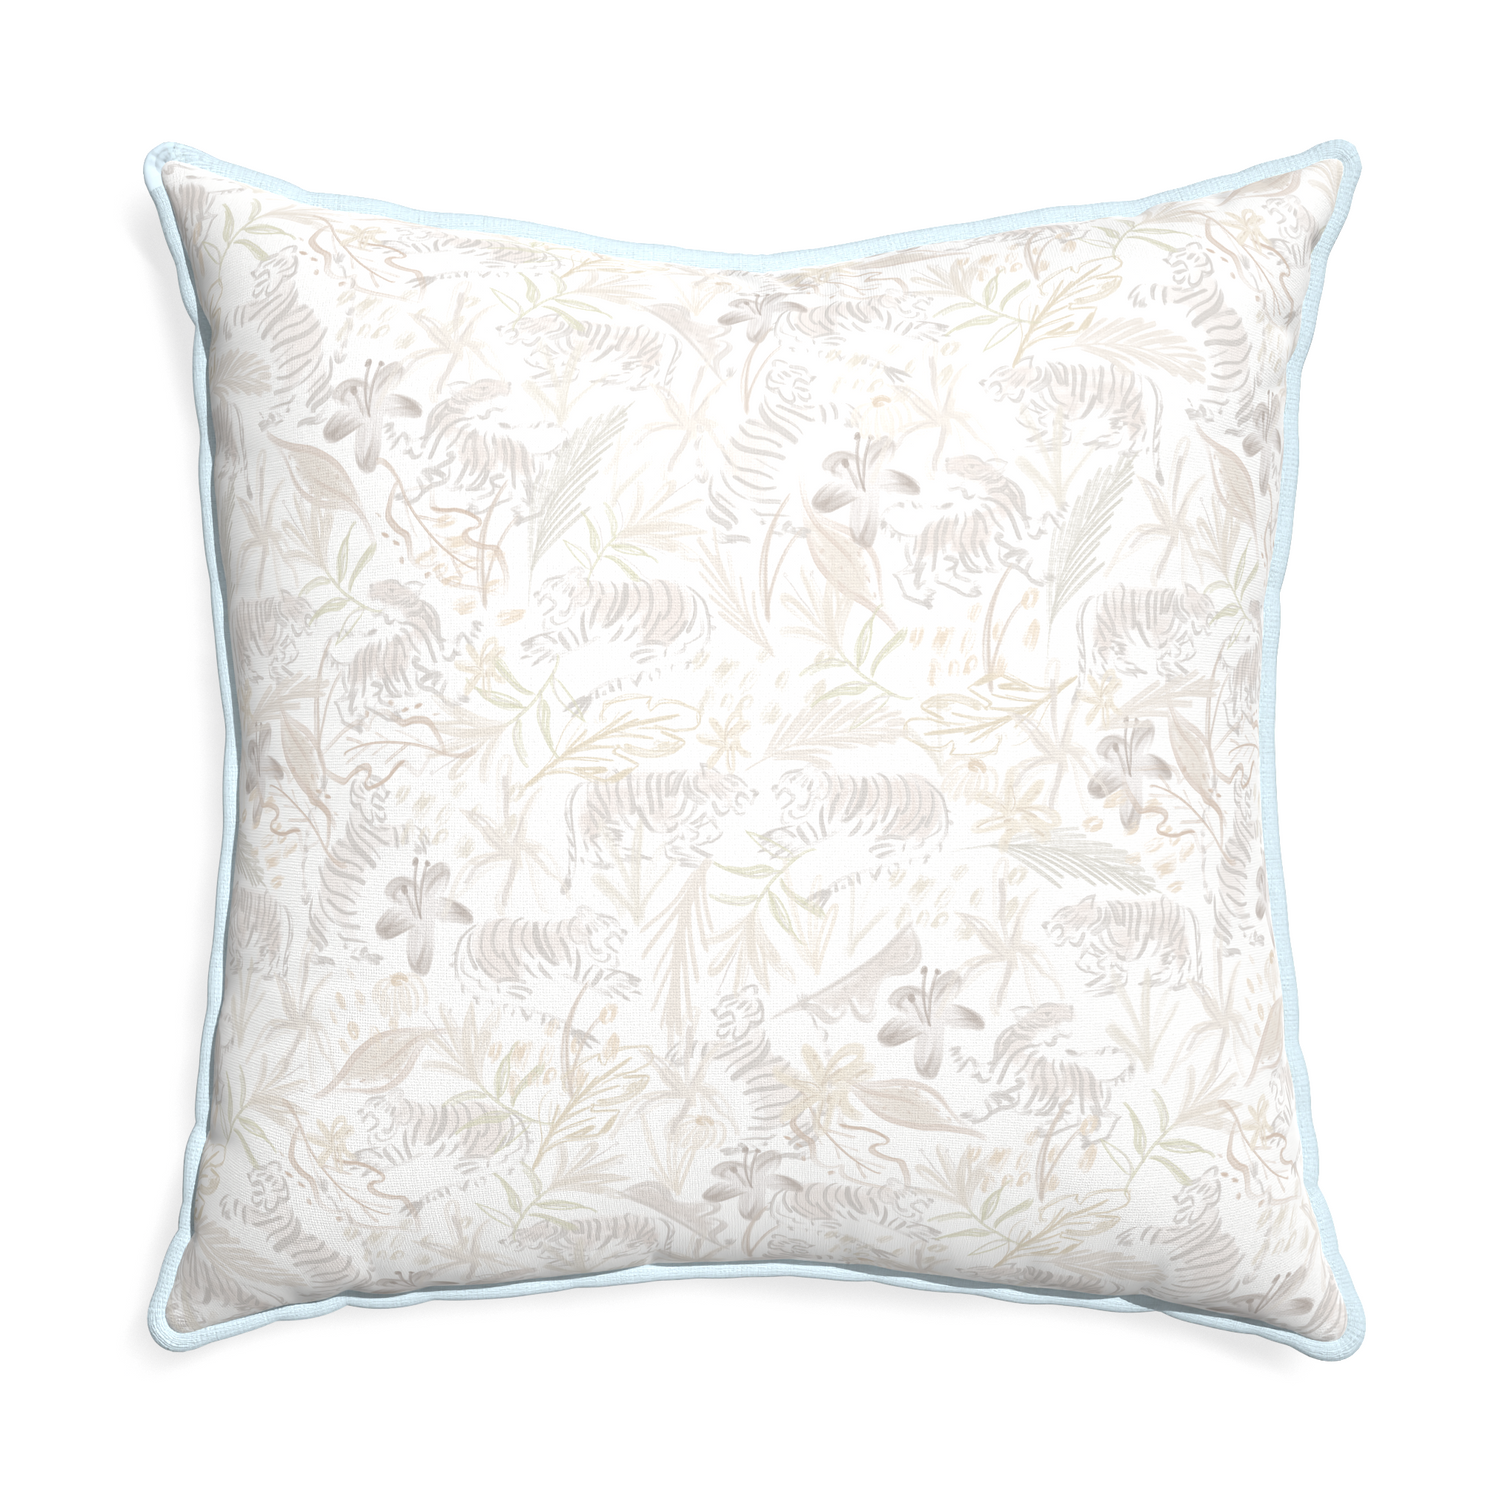 Euro-sham frida sand custom pillow with powder piping on white background